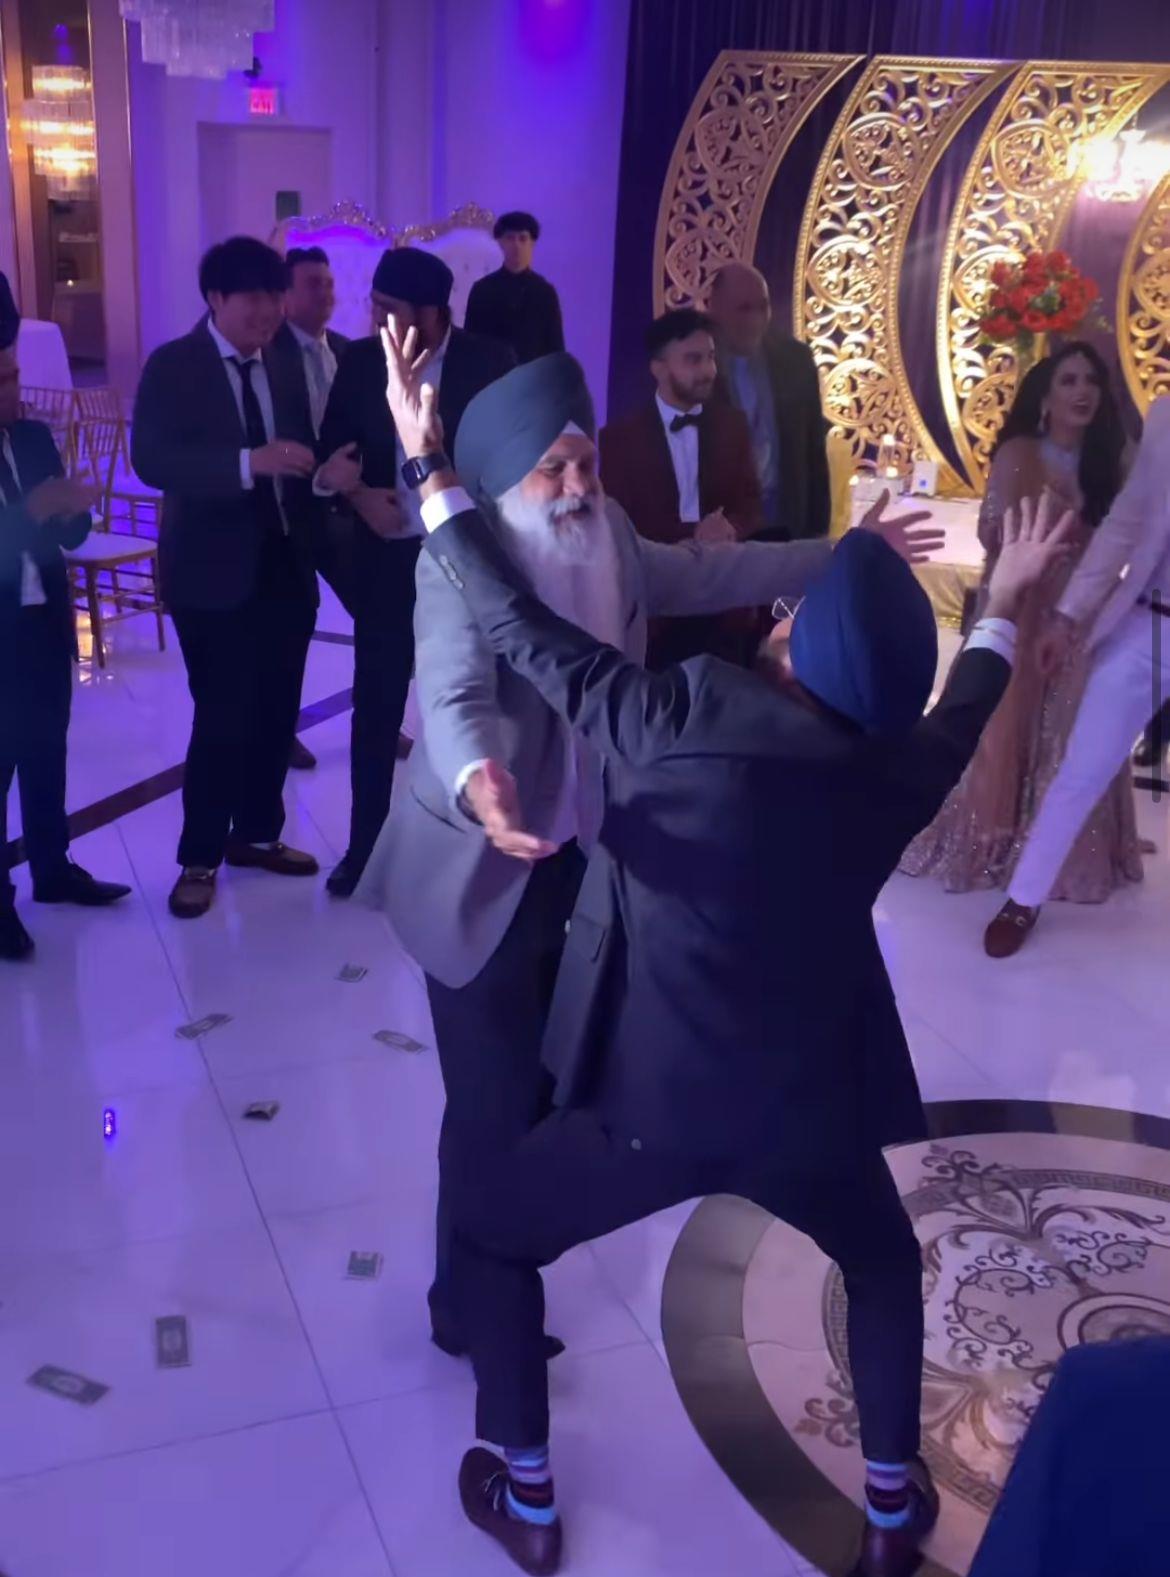 Watch: ‘Balle-balle’ dance off between 2 Sikh men to the tunes of ‘Tera yaar bolda’ goes viral